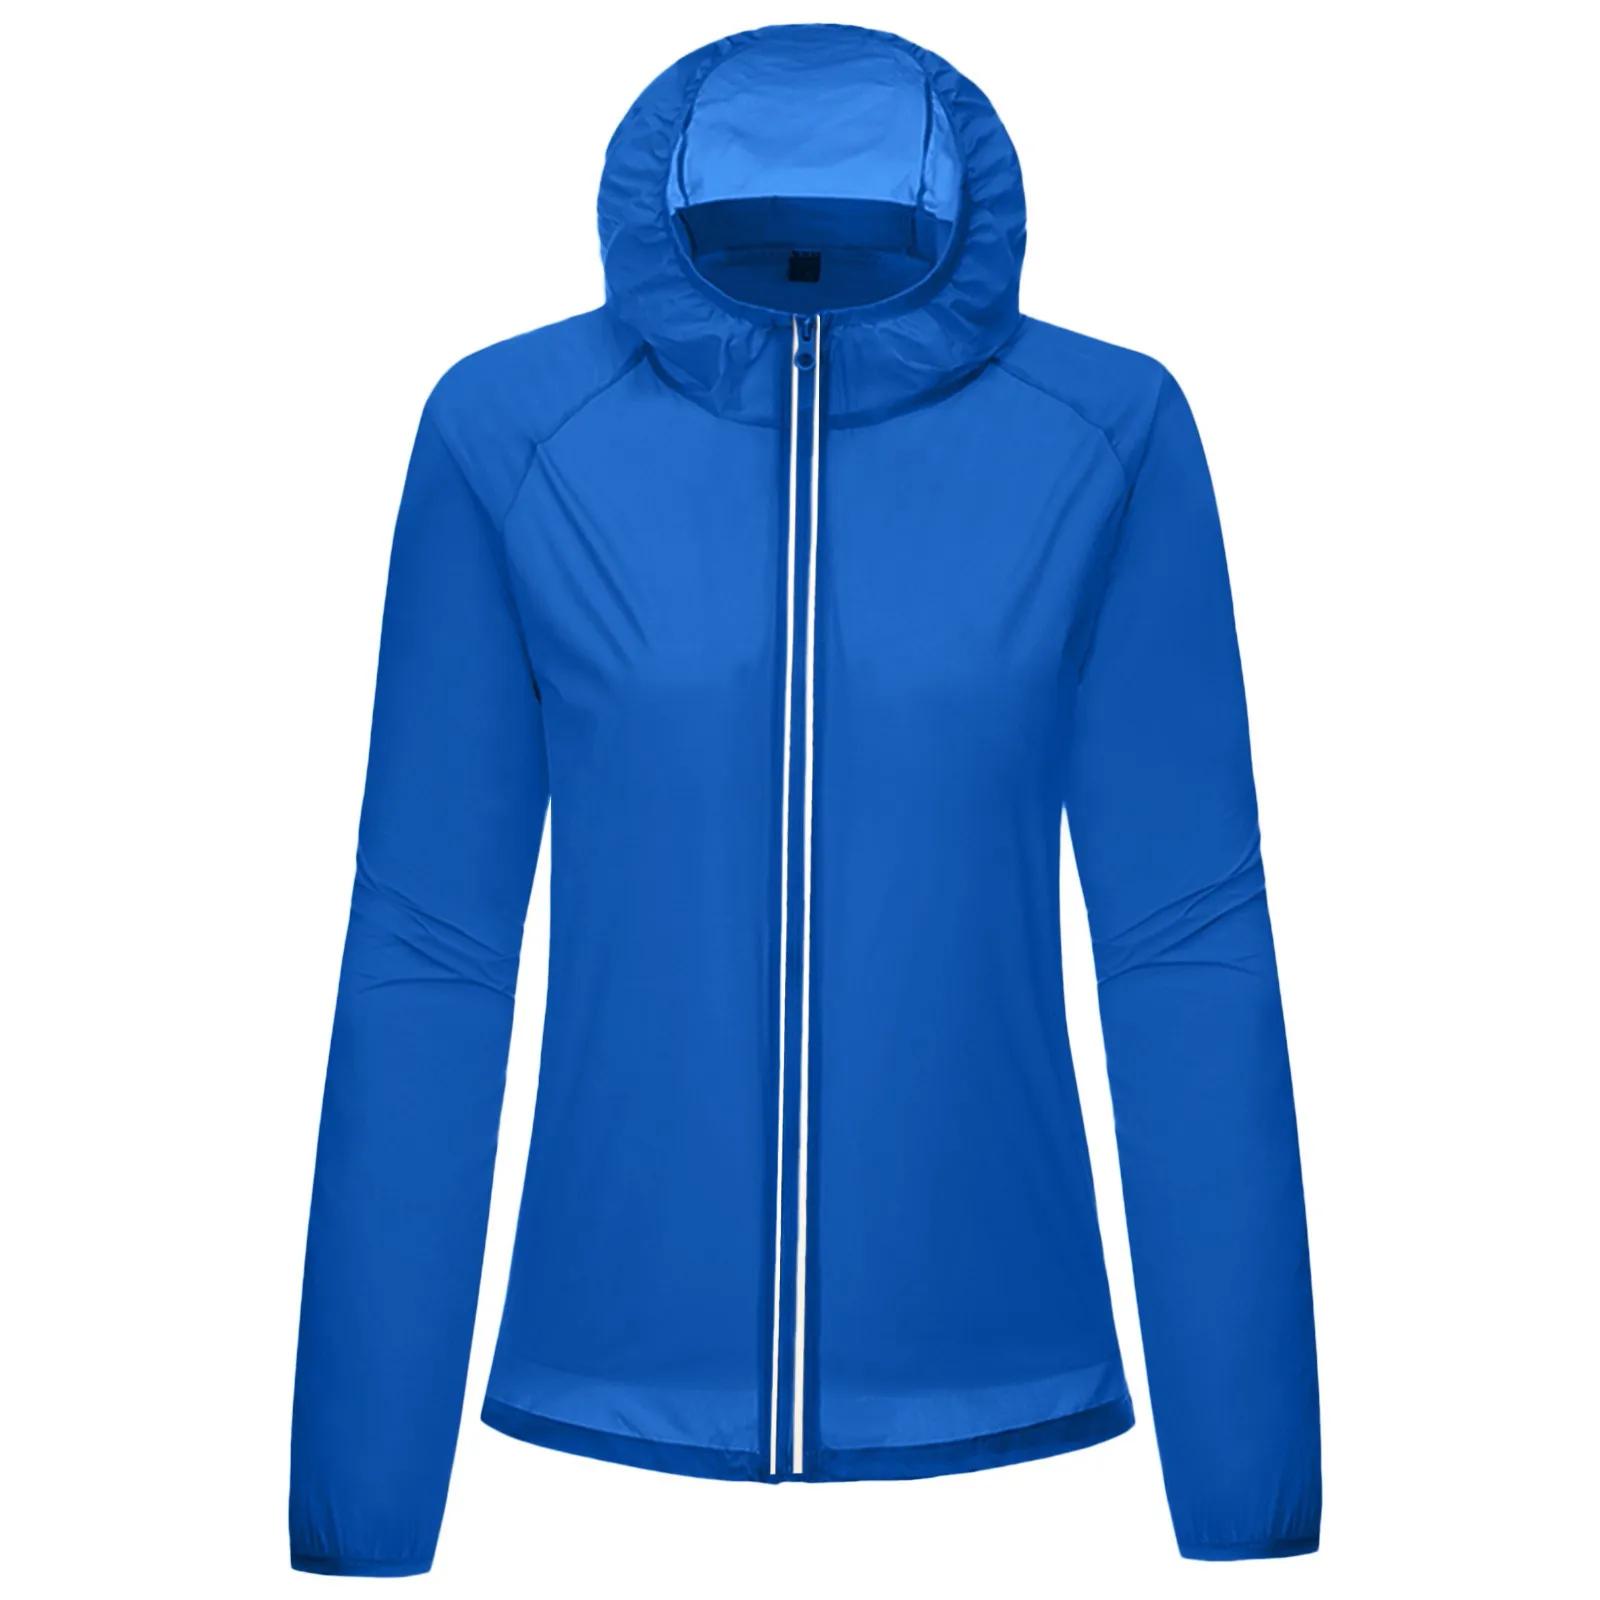 Aldult UniThin Top Outdoor Long Sleeve Hooded Windproof Jackets Ultra-Light Rainproof Windbreaker Solid Skin Coat